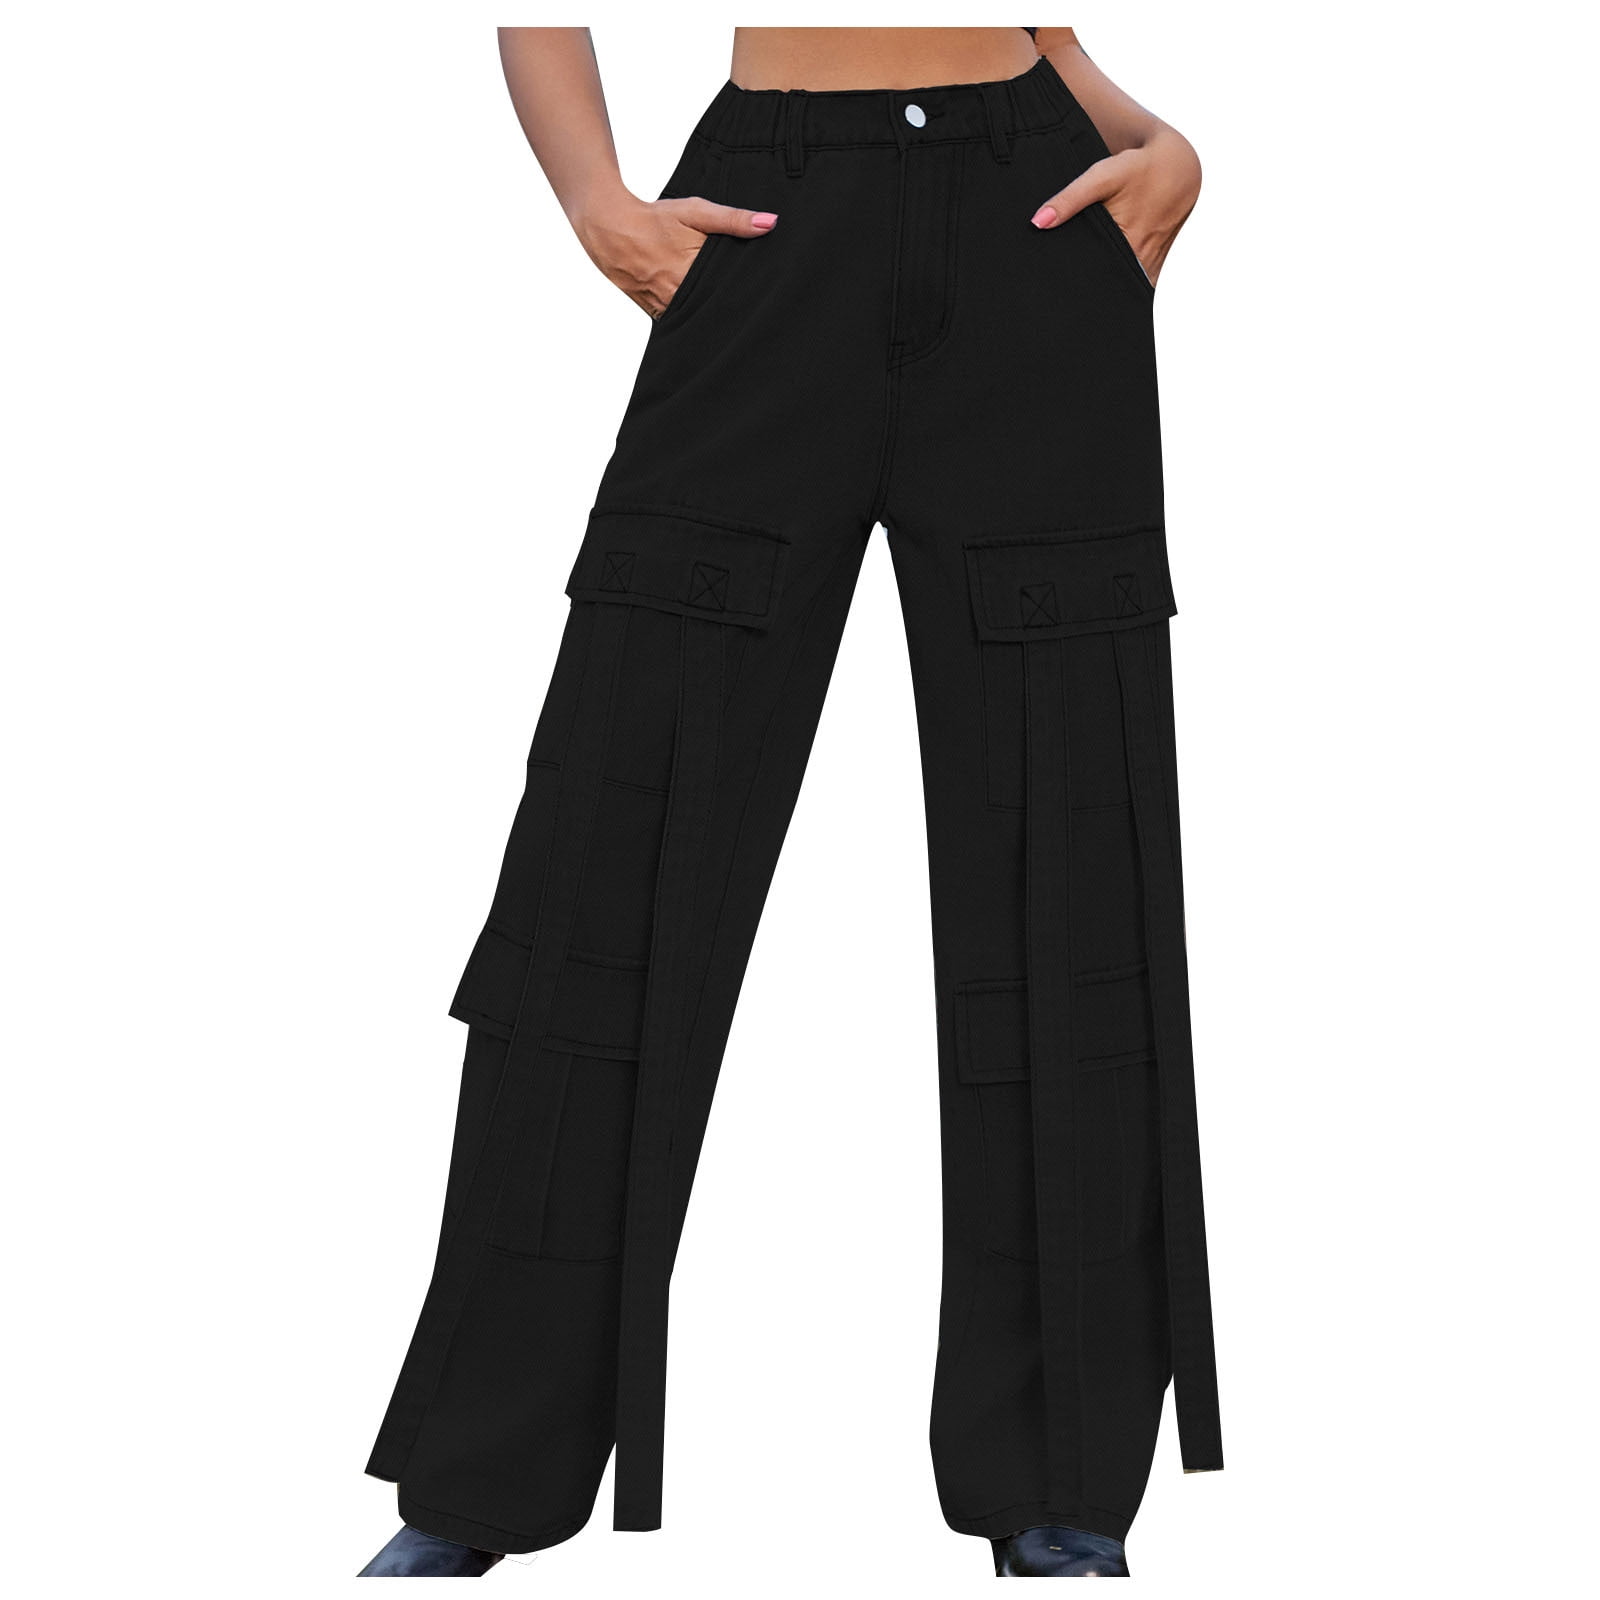 JWZUY Women's Cargo Pants Y2K High Waist Baggy Jeans Strappy Flap